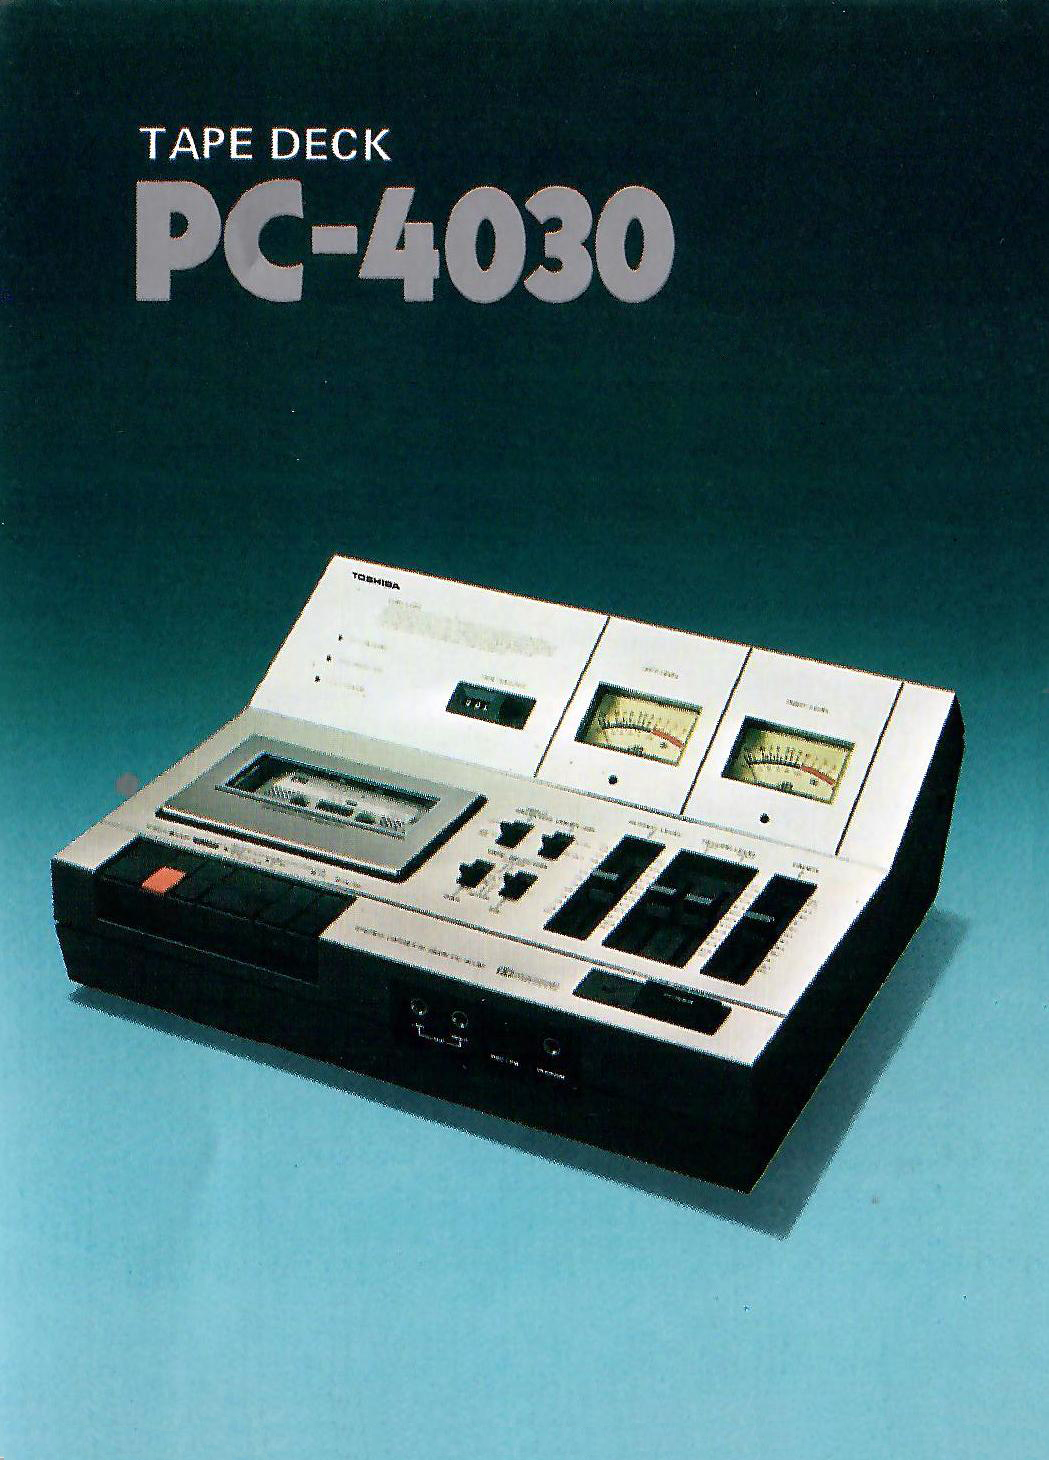 Toshiba PC-4030-Prospekt-1.jpg